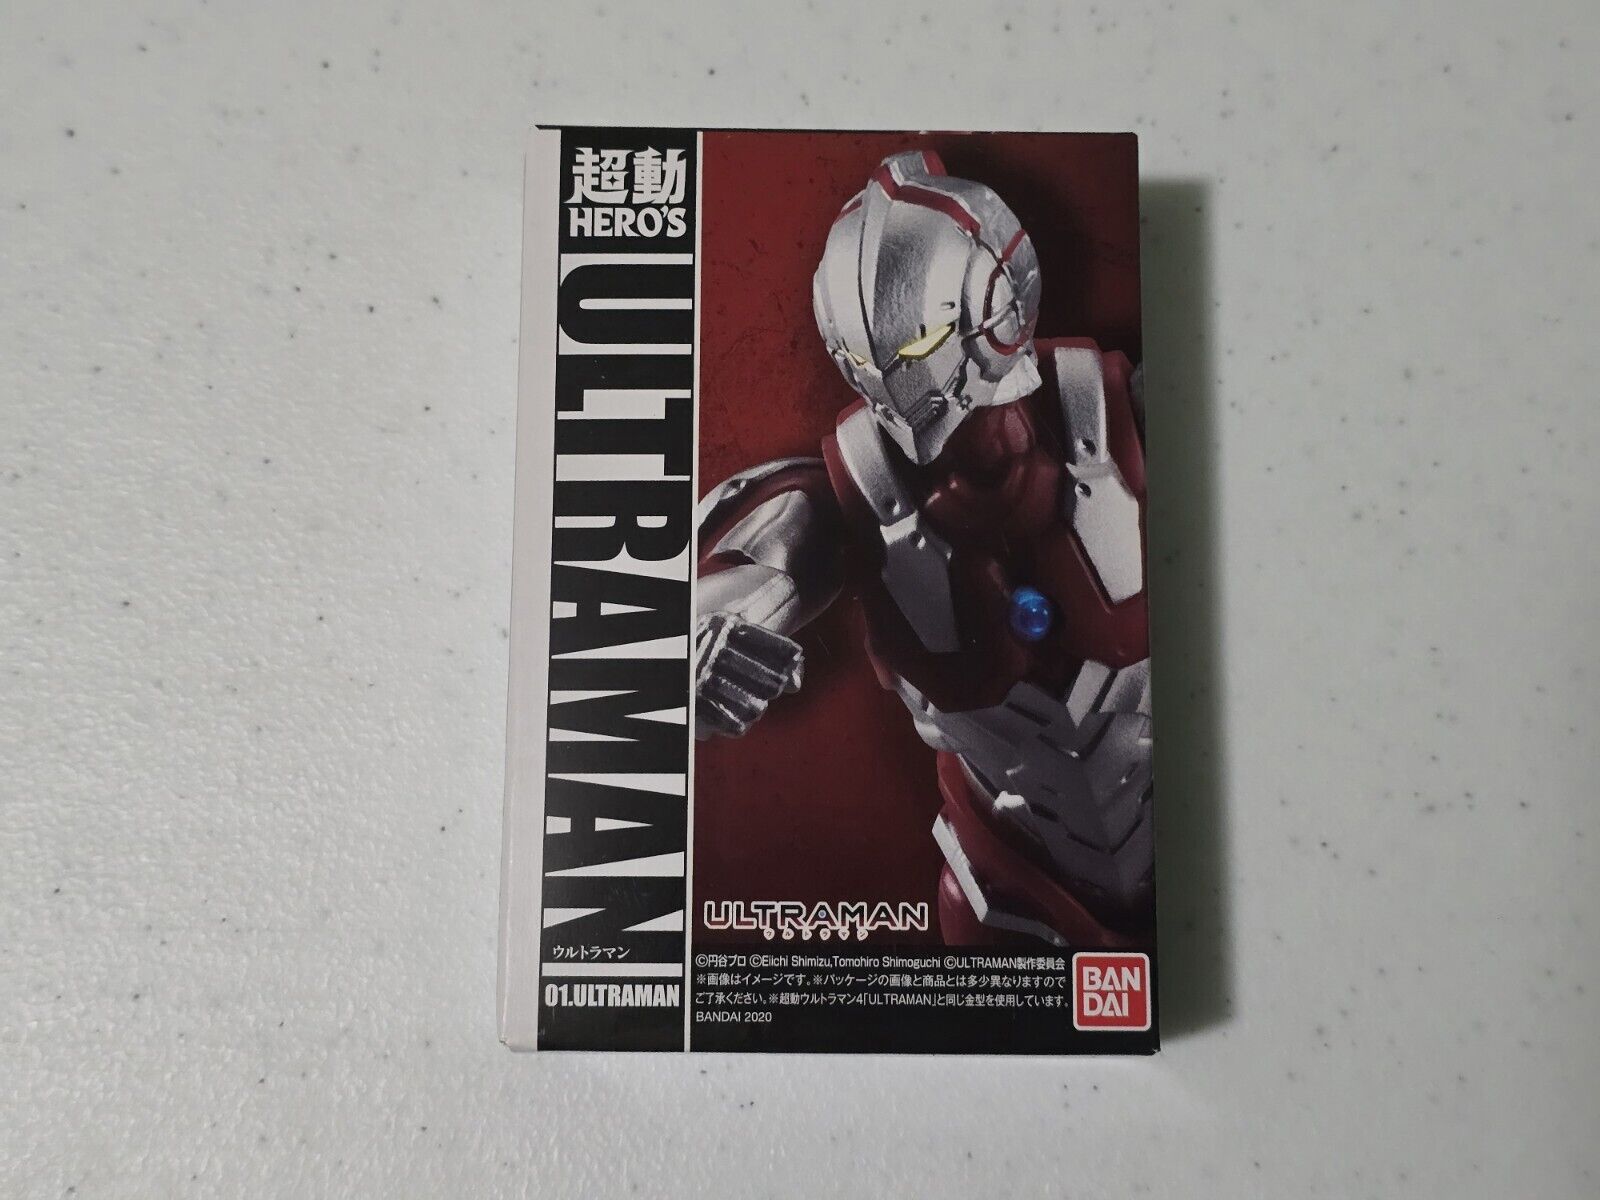 BANDAI HERO'S ULTRAMAN 01 Ultraman New Sealed US Seller 